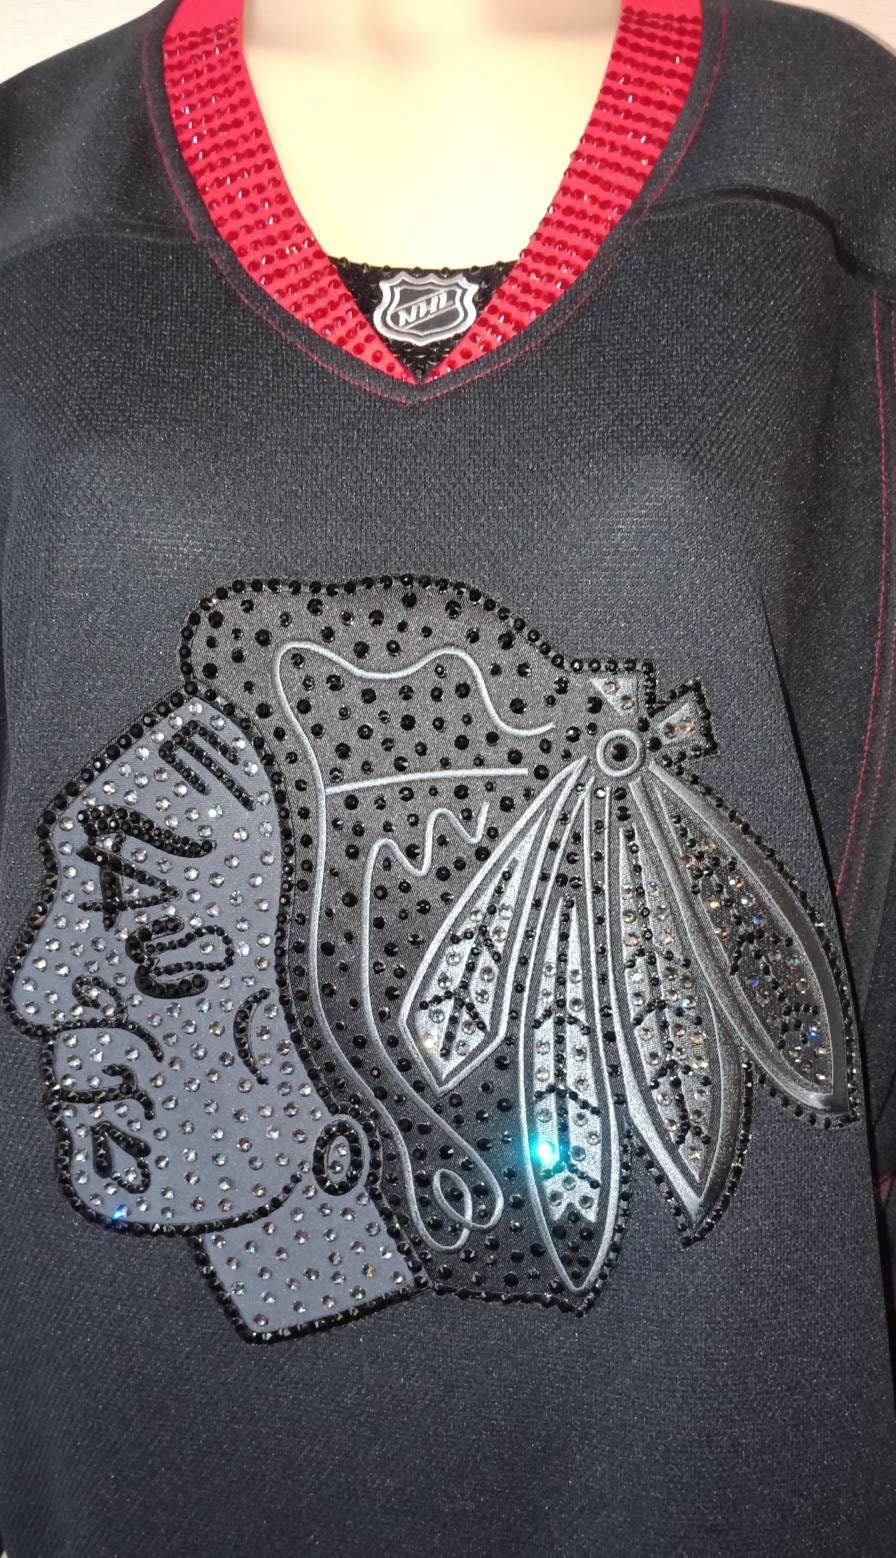 Chicago Hockey Blackhawks Custom Crystal Bling Service this 